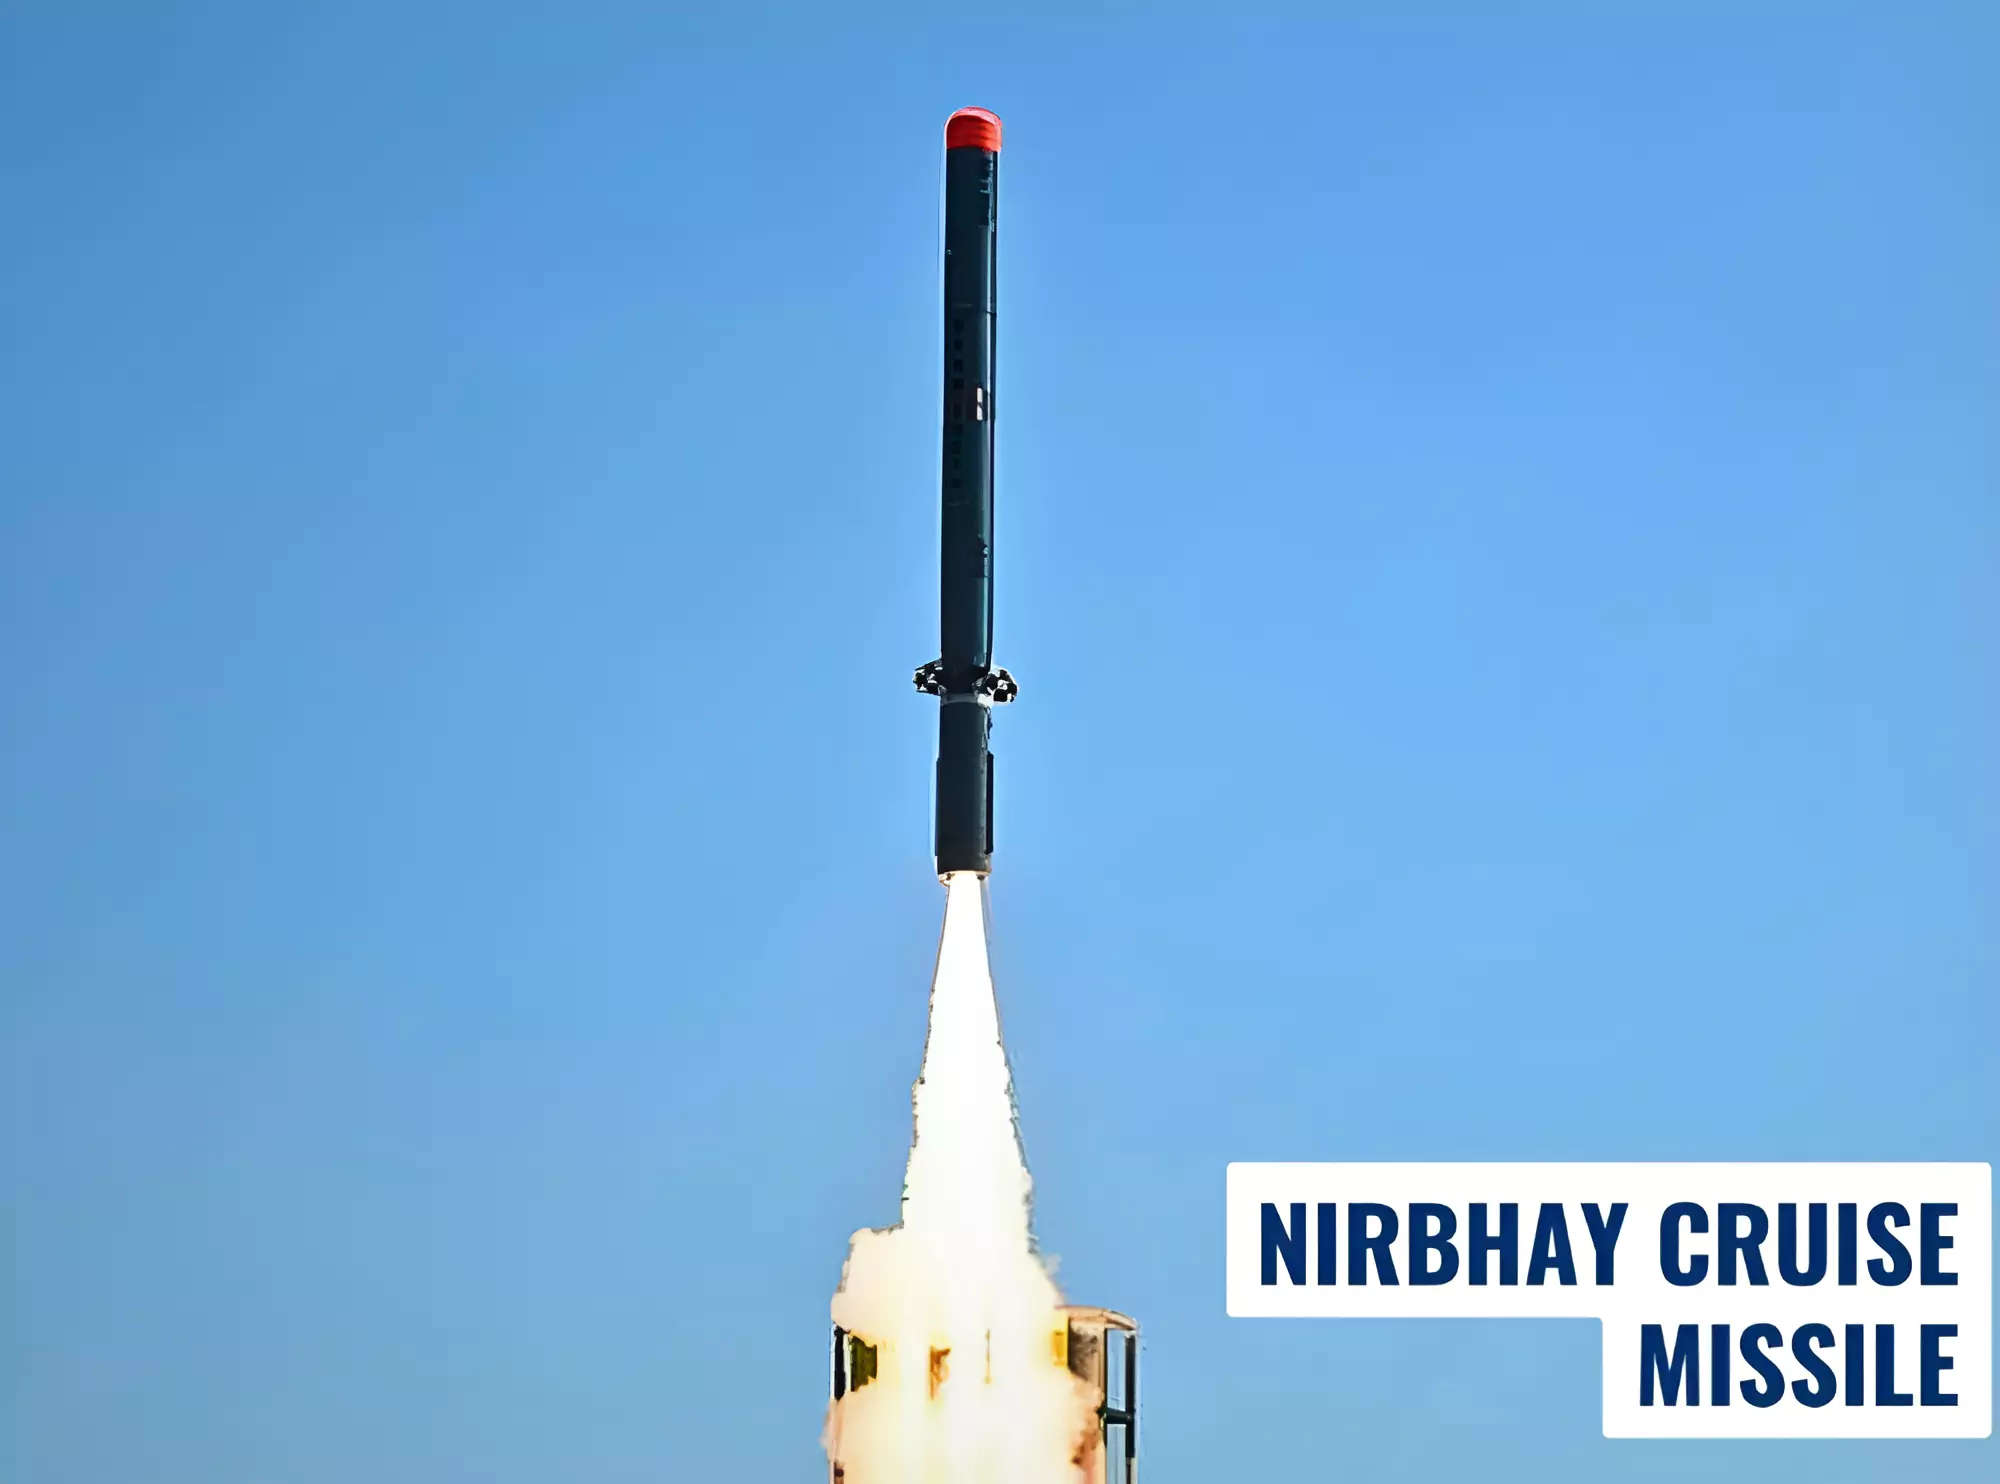 Nirbhay Cruise Missile